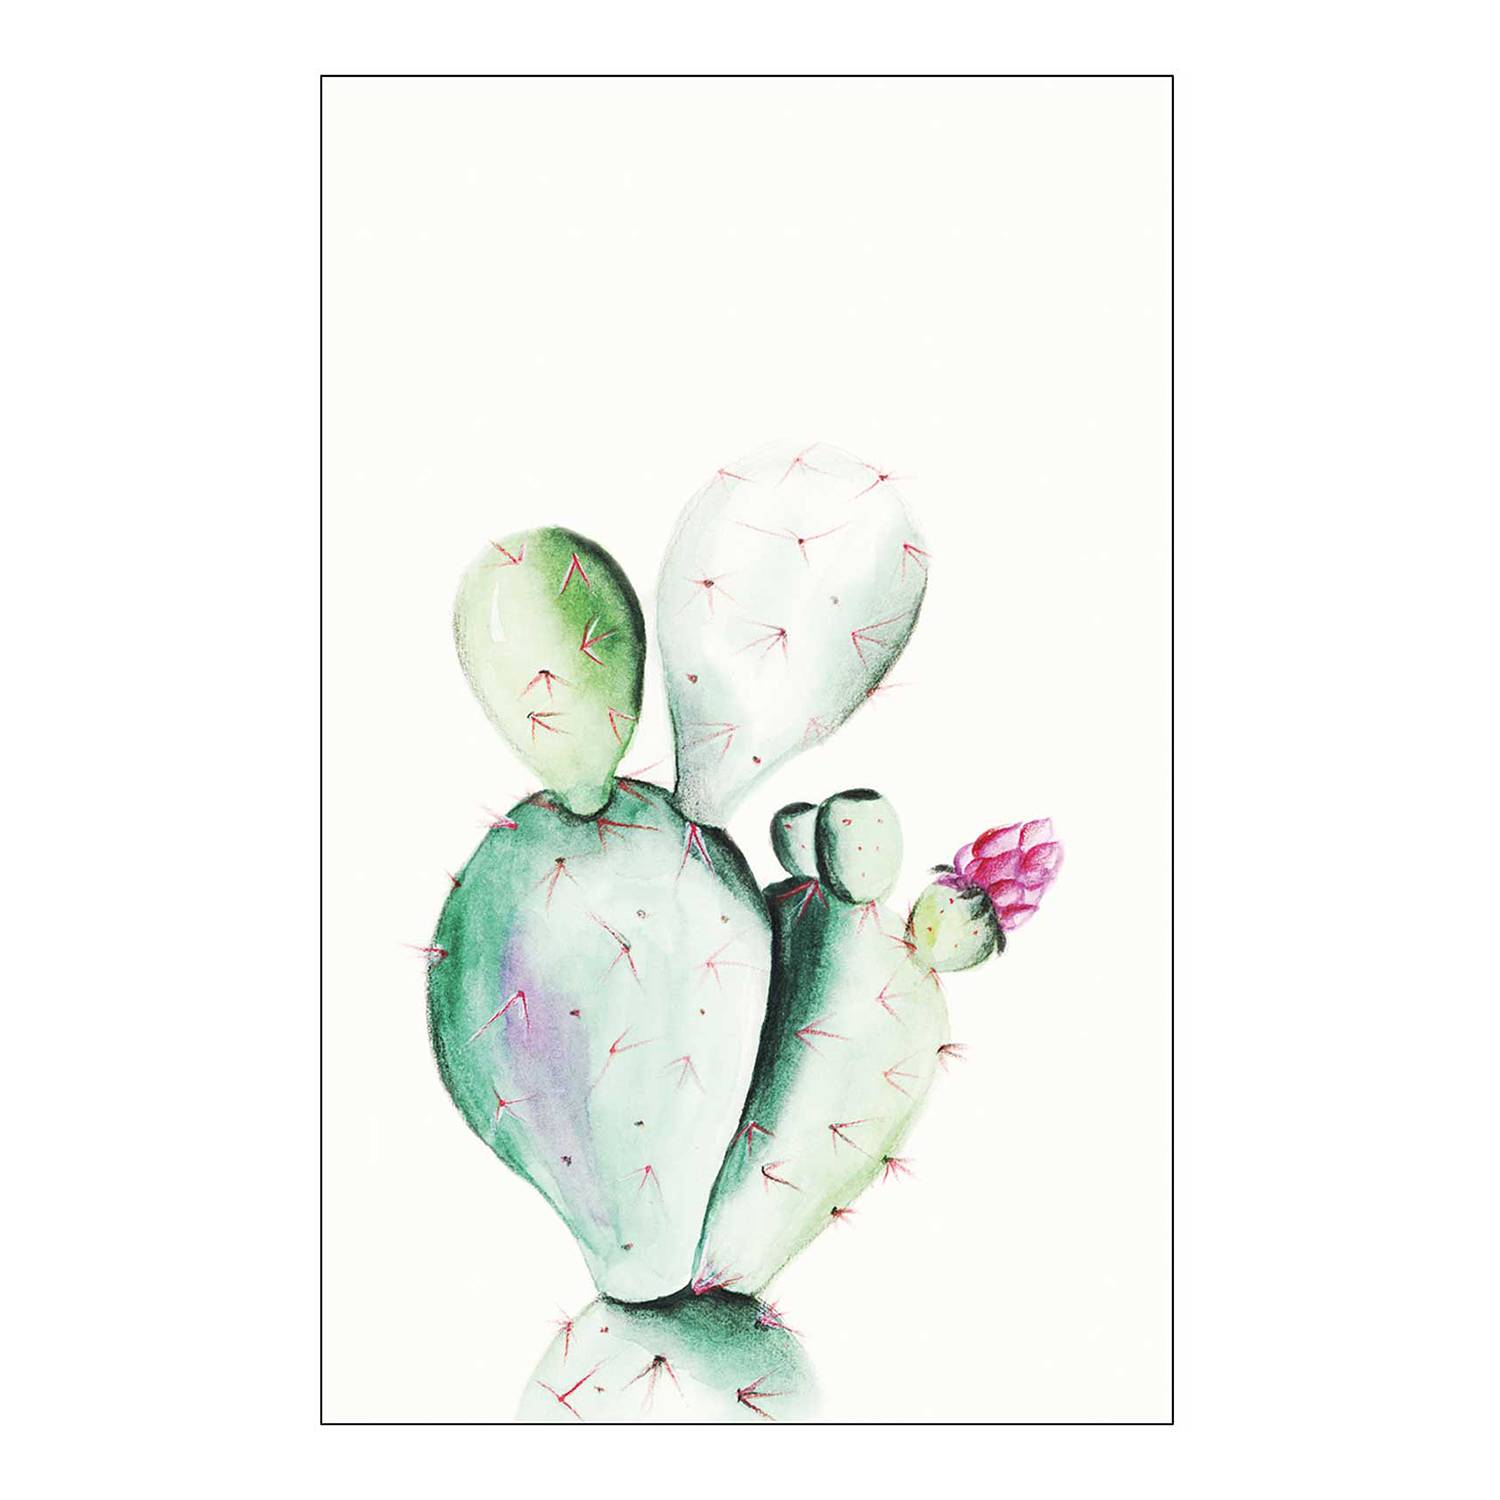 Wandbild Prickly Pear Watercolor kaufen | home24